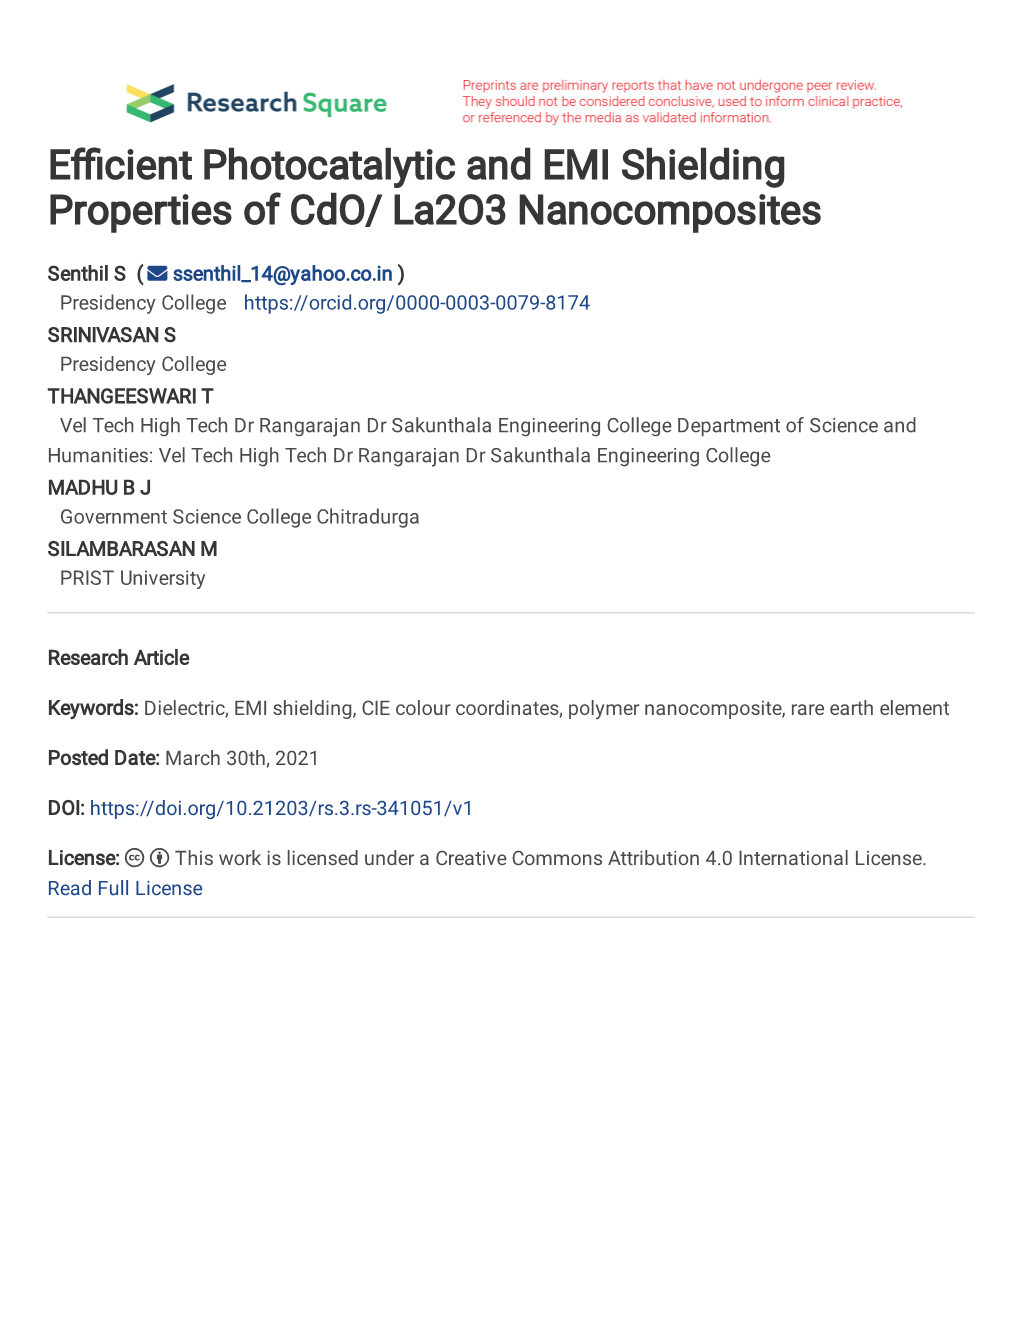 Efficient Photocatalytic and EMI Shielding Properties of Cdo/ La2o3 Nanocomposites